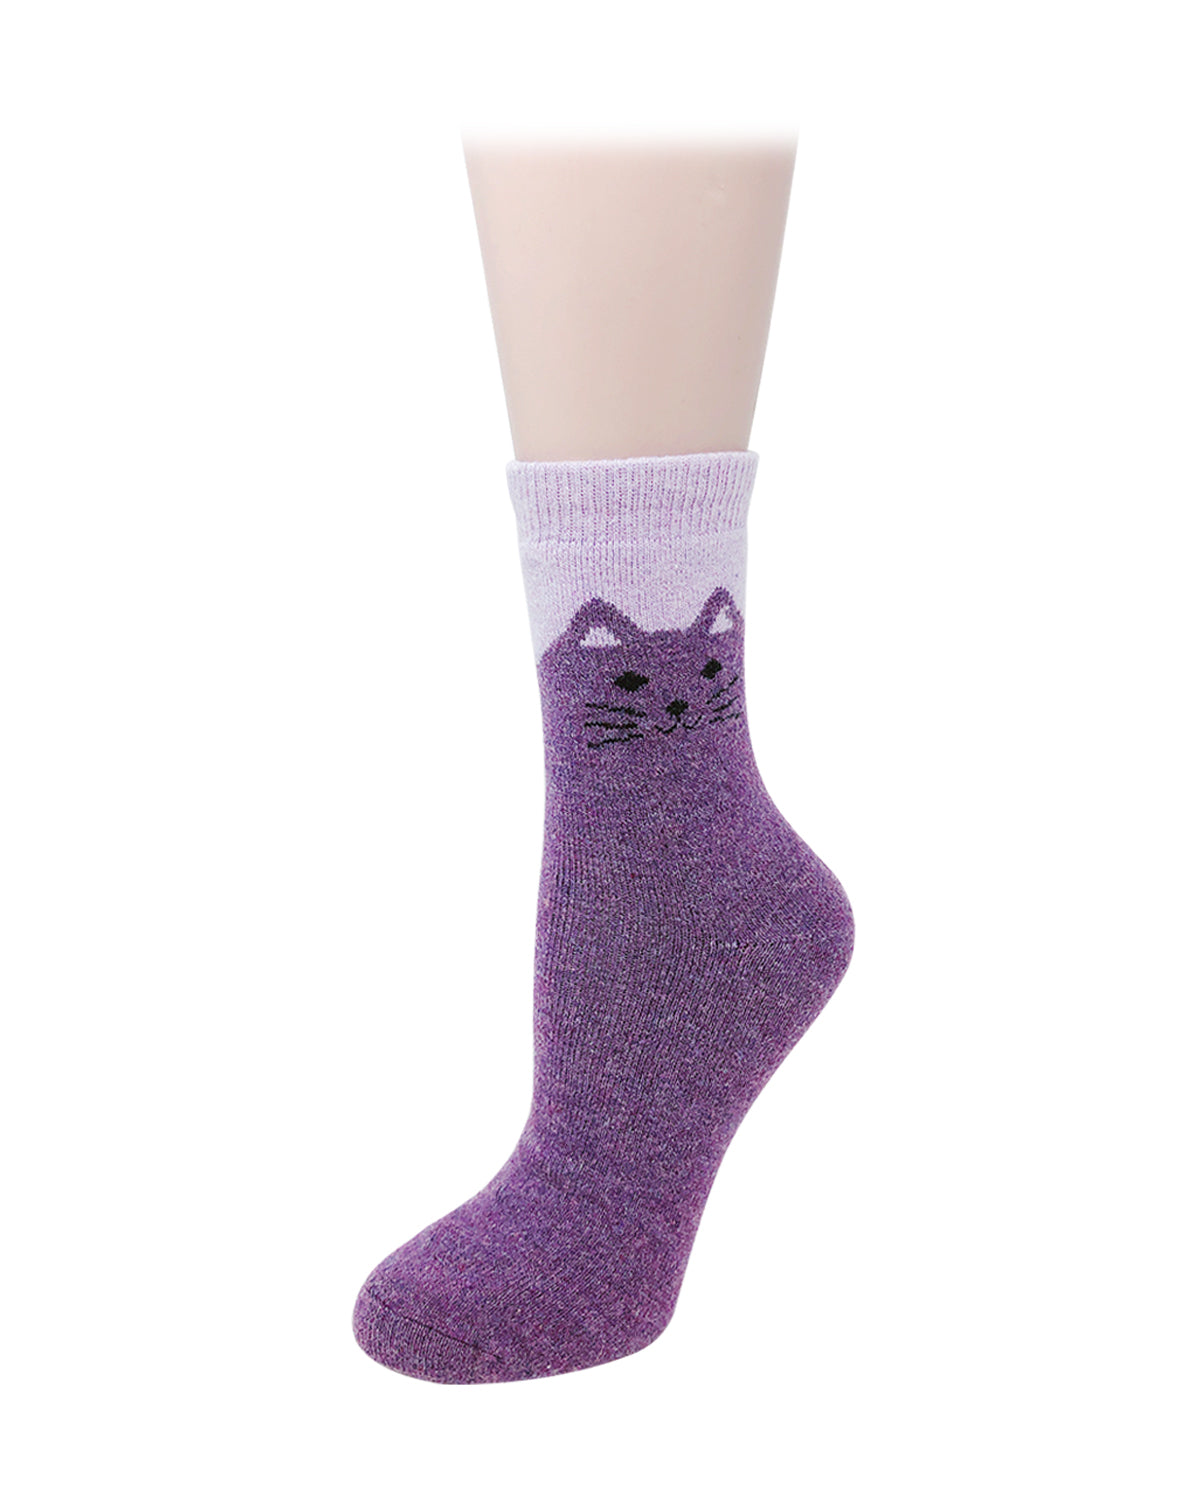 Happy Cat Feet Girls Wool Socks - Extra Thick and Warm Winter Kids